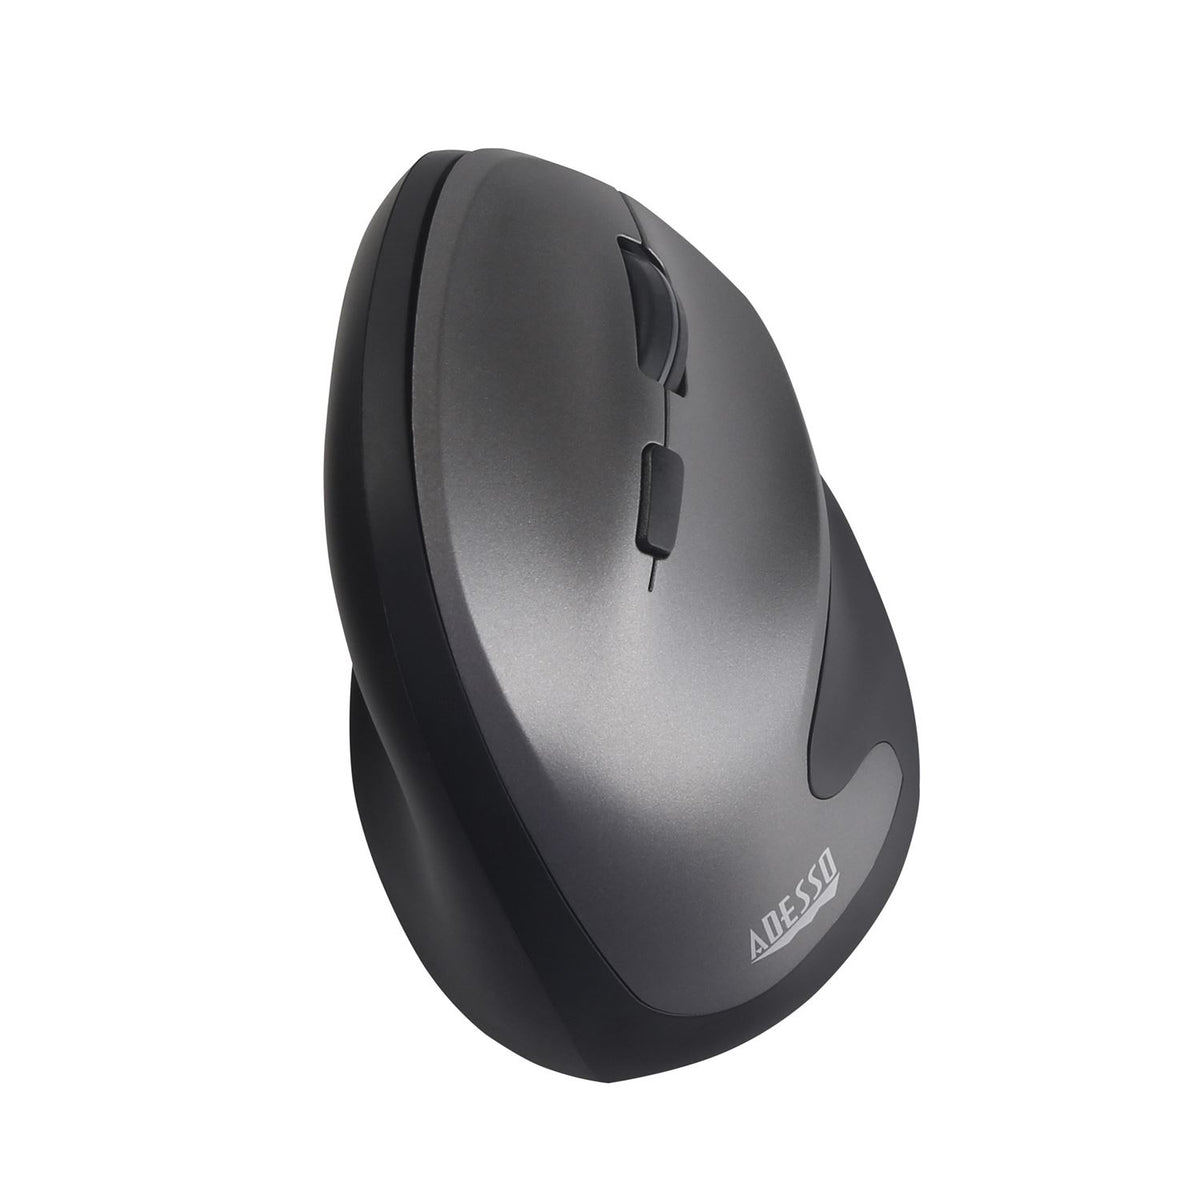 Adesso iMouse A20 RF Wireless Optical mouse - 2,400 DPI